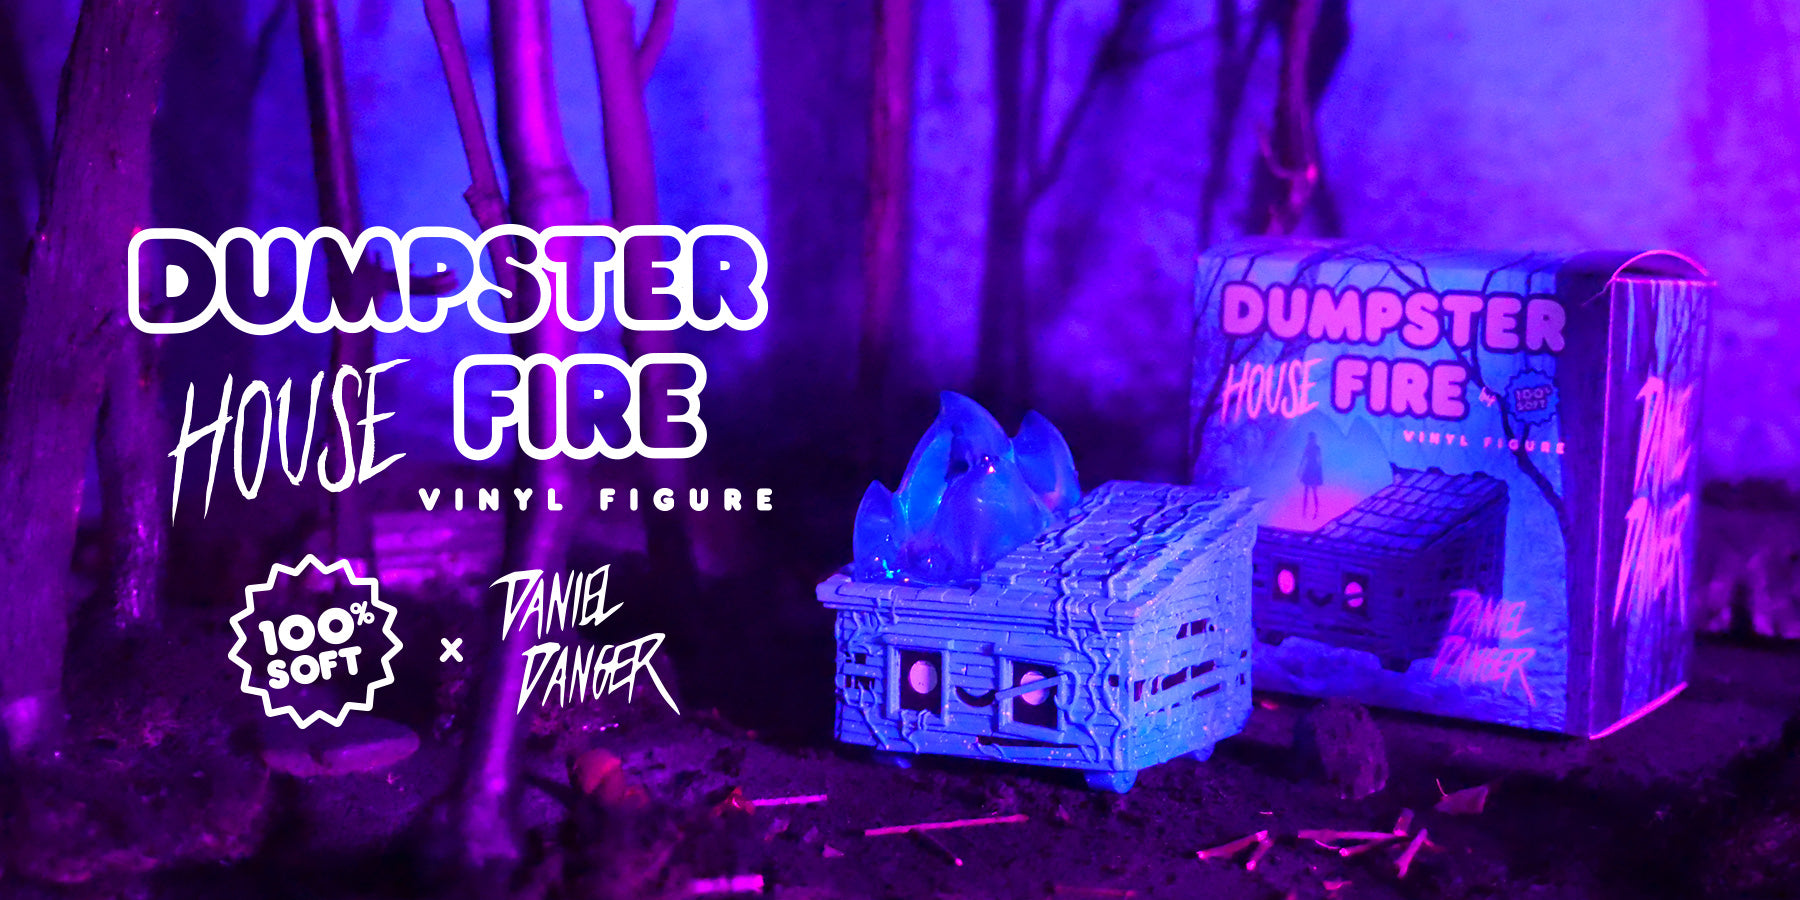 Daniel Danger's Dumpster House Fire vinyl figure pictured with box